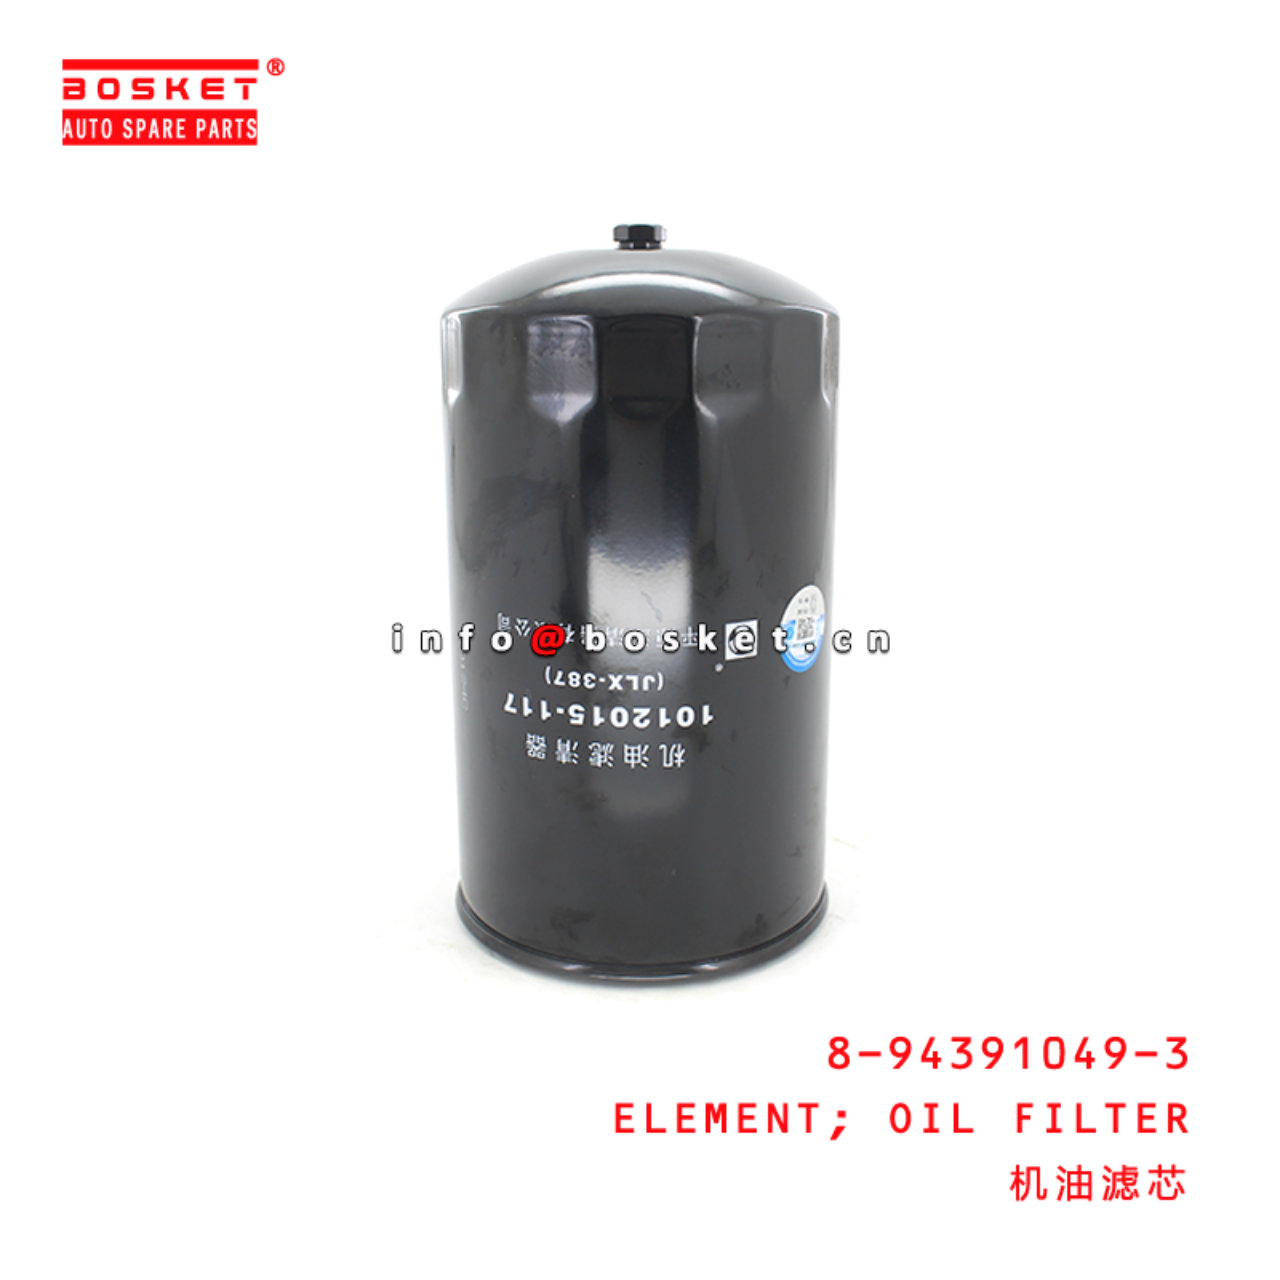 8-94391049-3 Oil Filter Element Suitable for ISUZU FVR34 8943910493